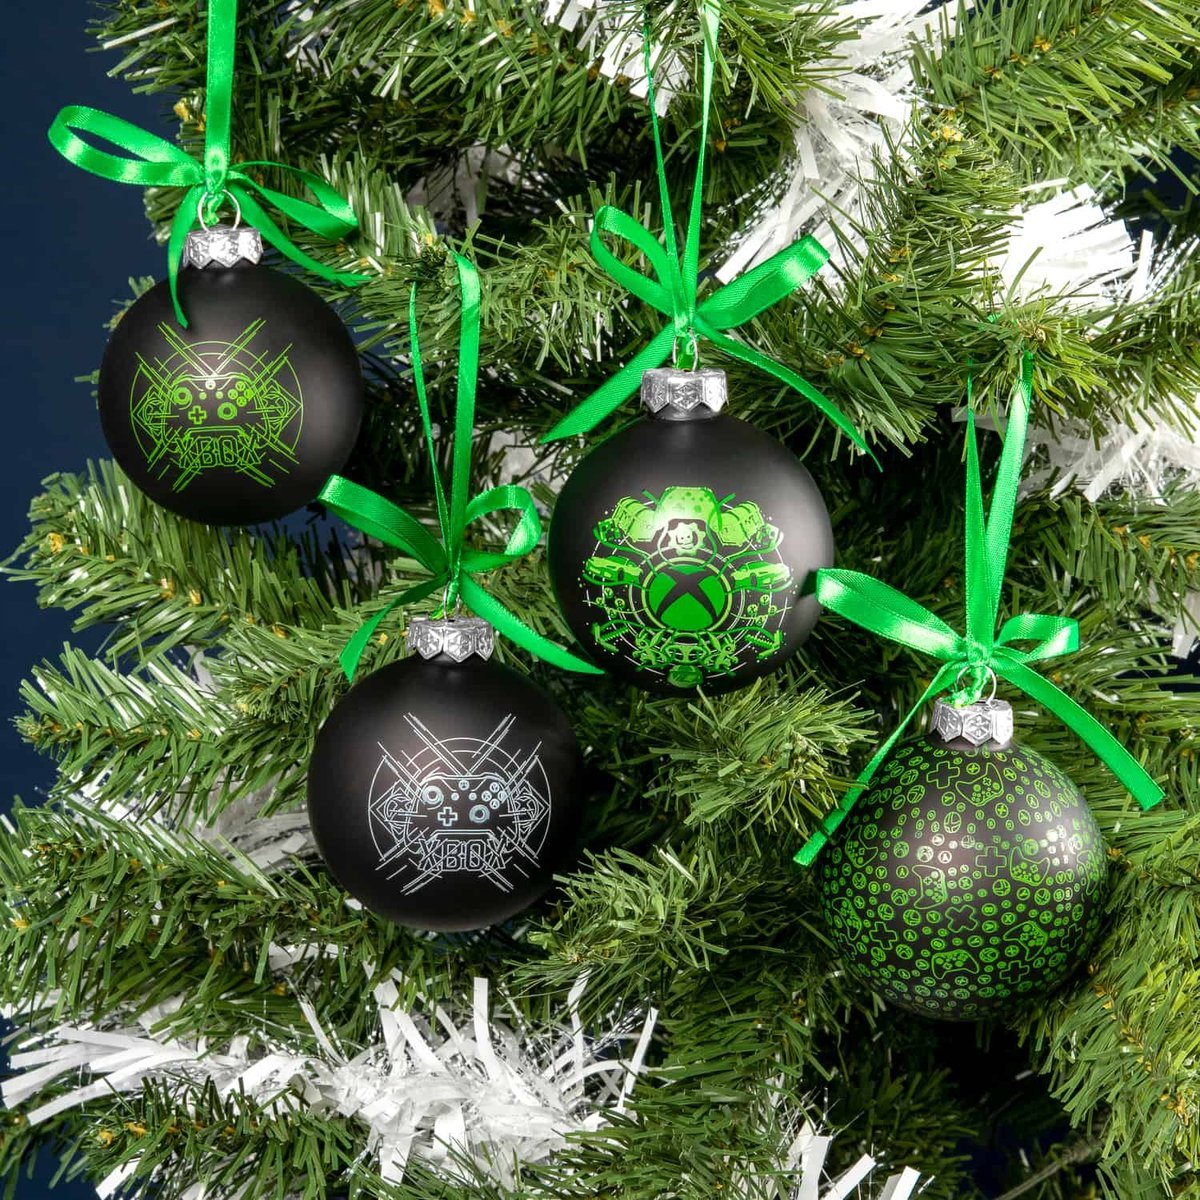 Xbox - Set of 4 Glass Ornaments - darkling.be